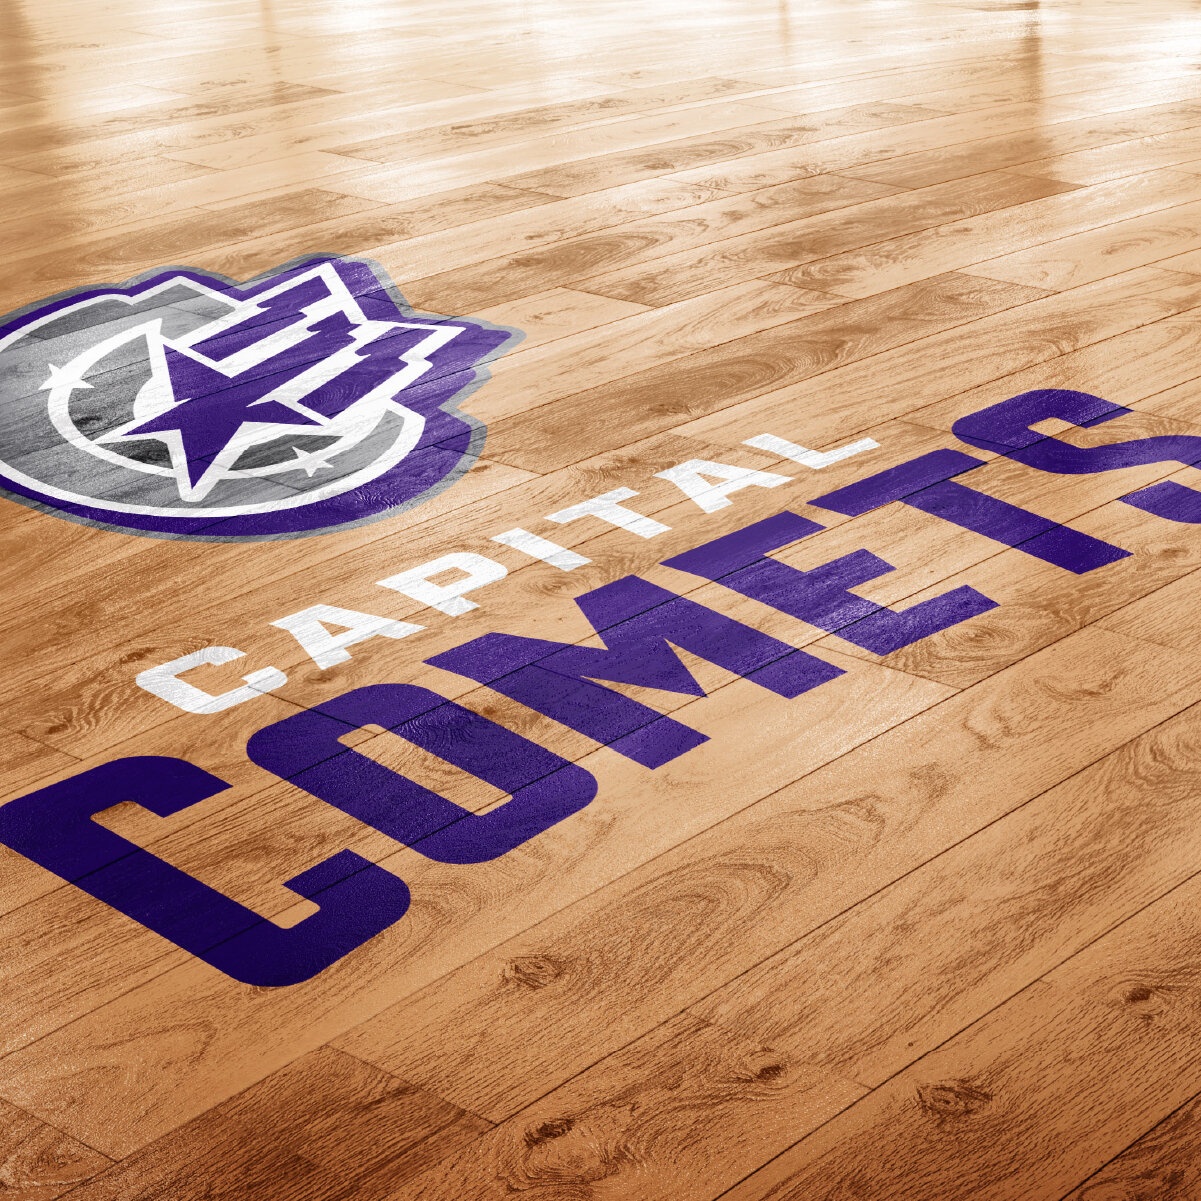 Capital comets logo_Instagram copy 5.jpg